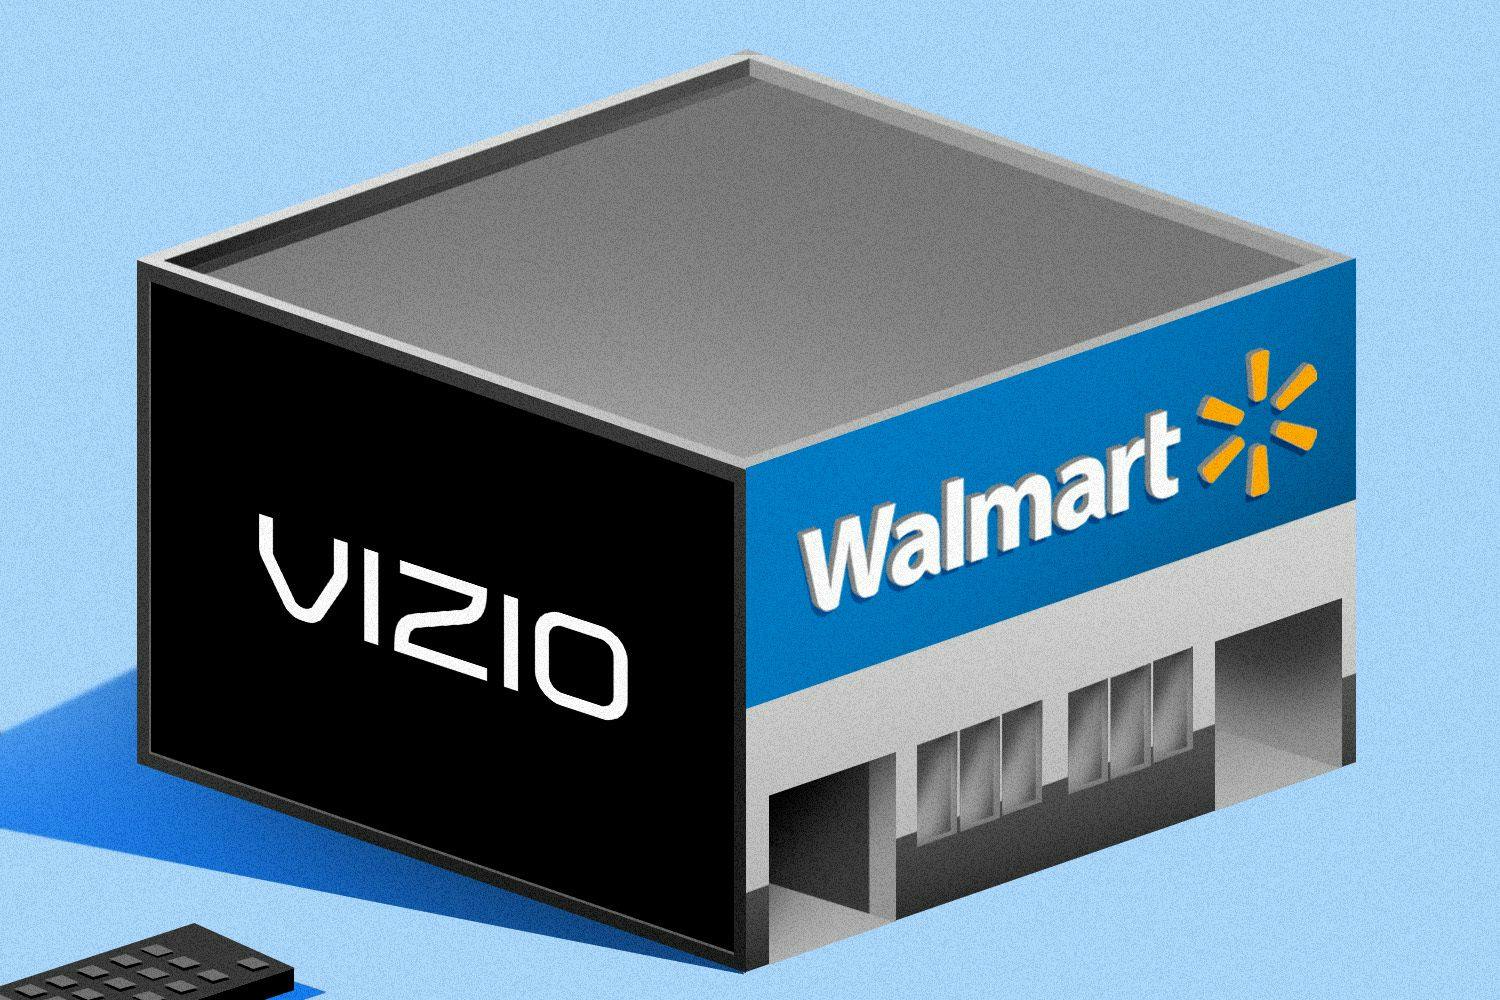 Walmart and Vizio logos together